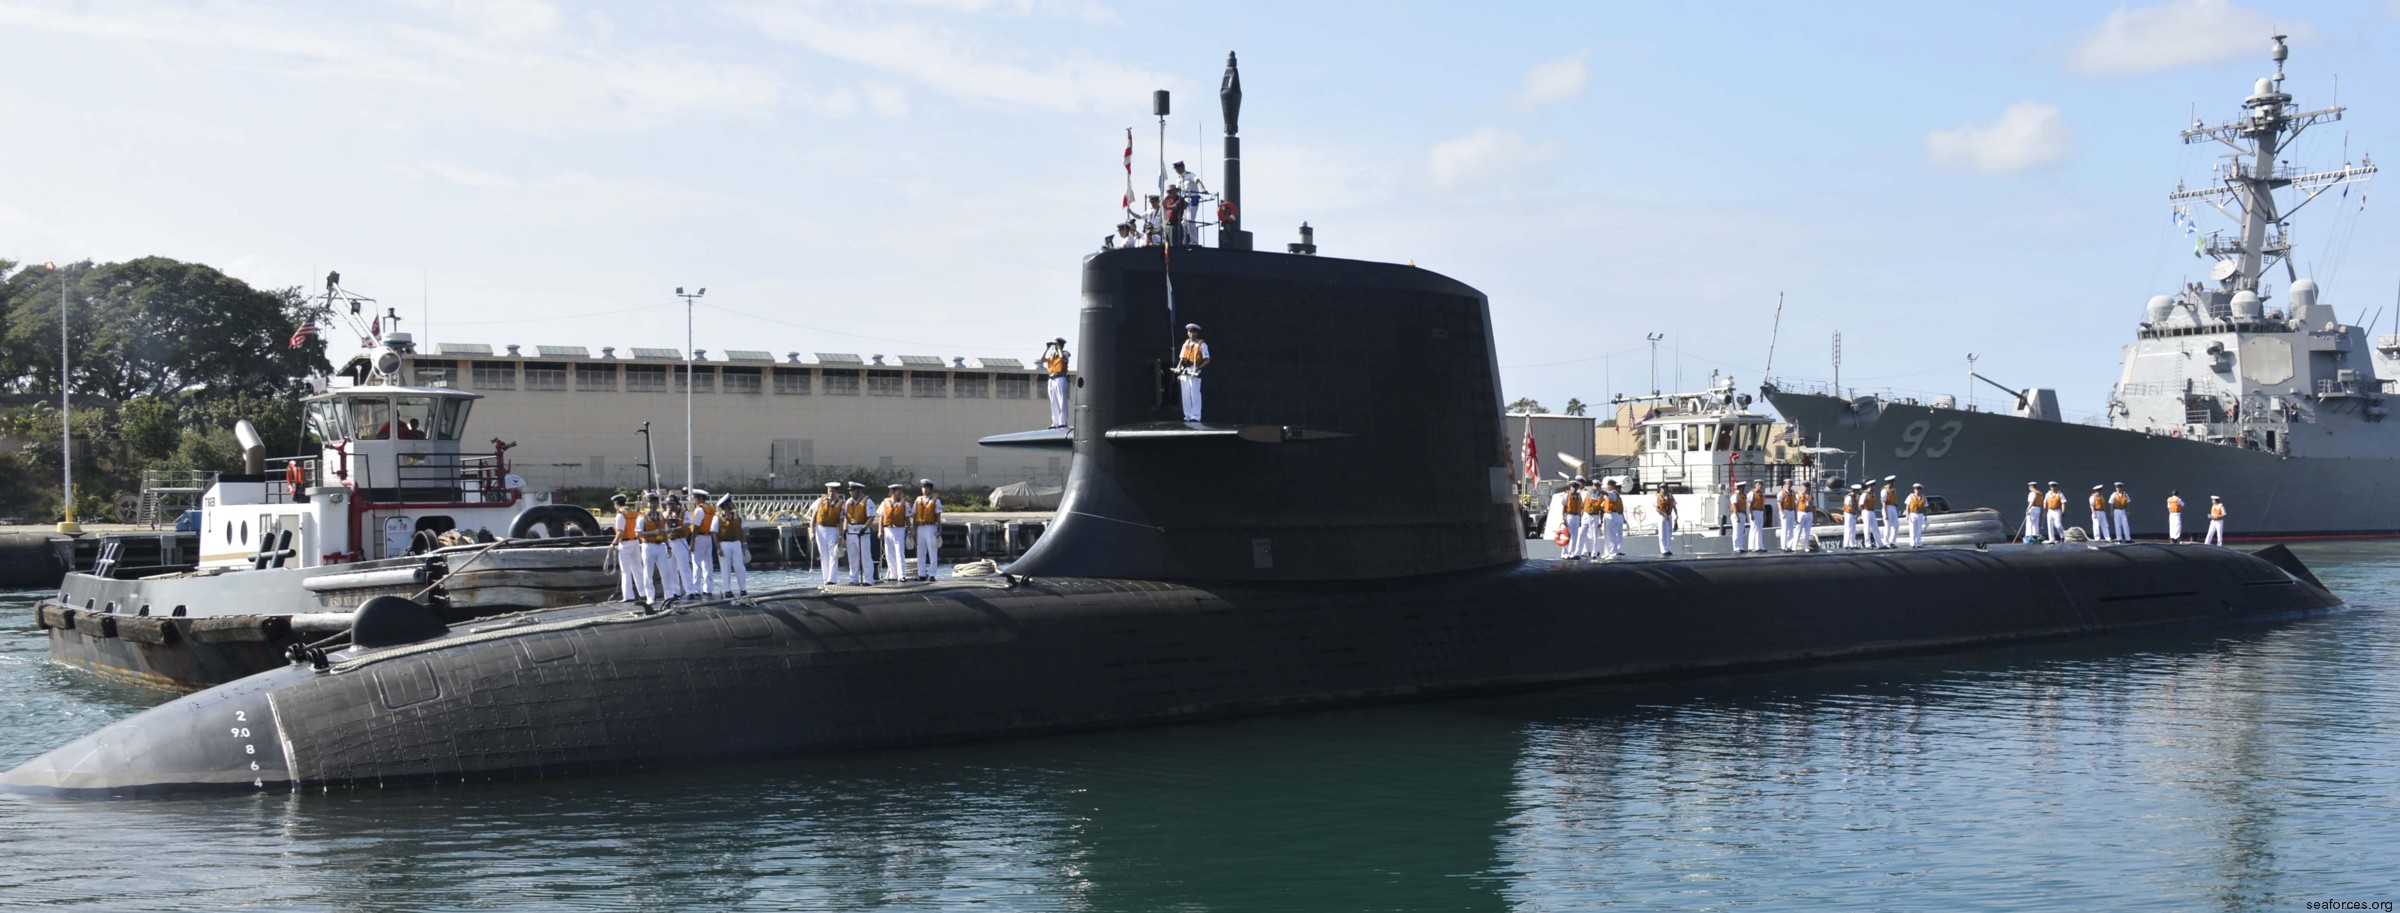 ss-503 js hakuryu 16ss soryu class attack submarine ssk japan maritime self defense force jmsdf 03